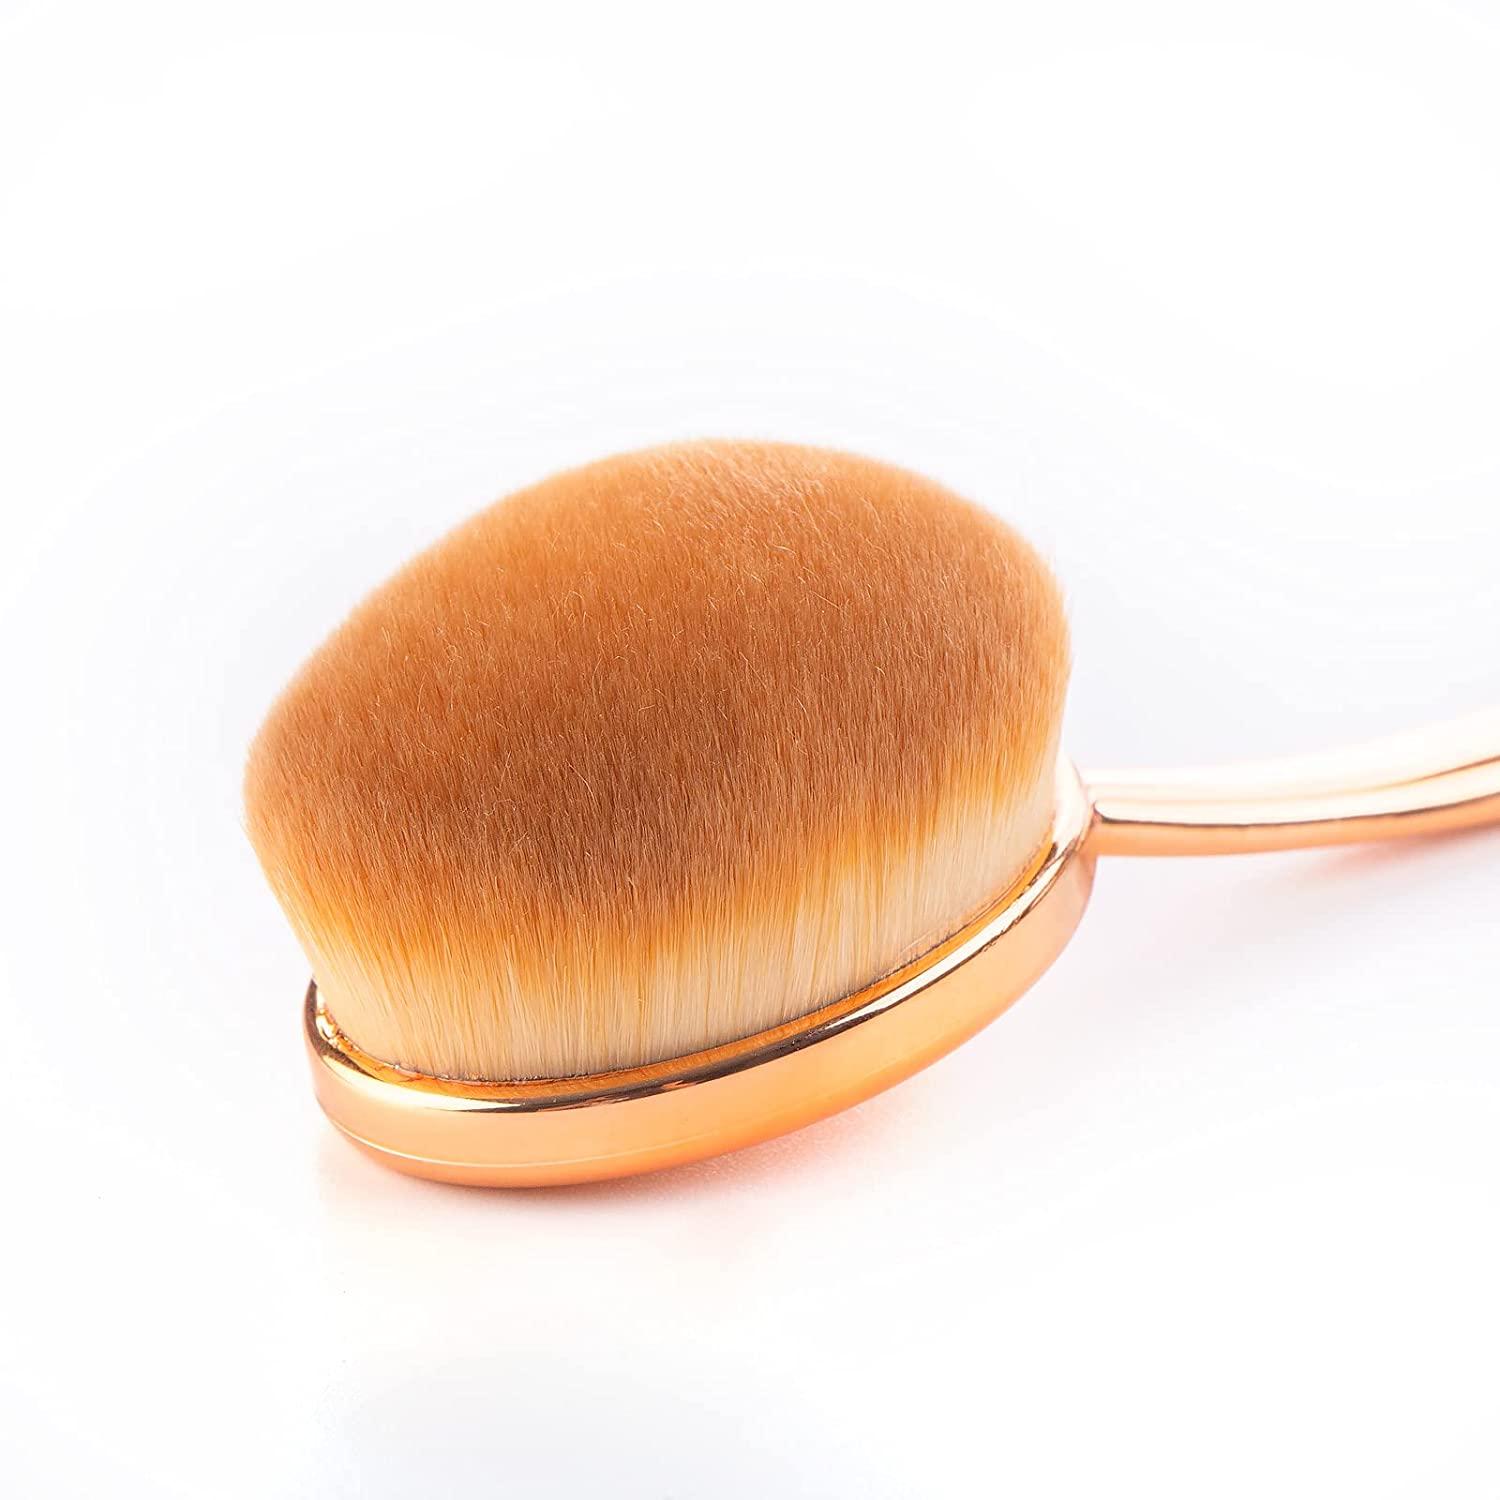 5Pcs Oval Makeup Brushes Portable Toothbrush Oval Nylon Hair Cosmetic  Makeup Blush Face Foundation Blending Brush